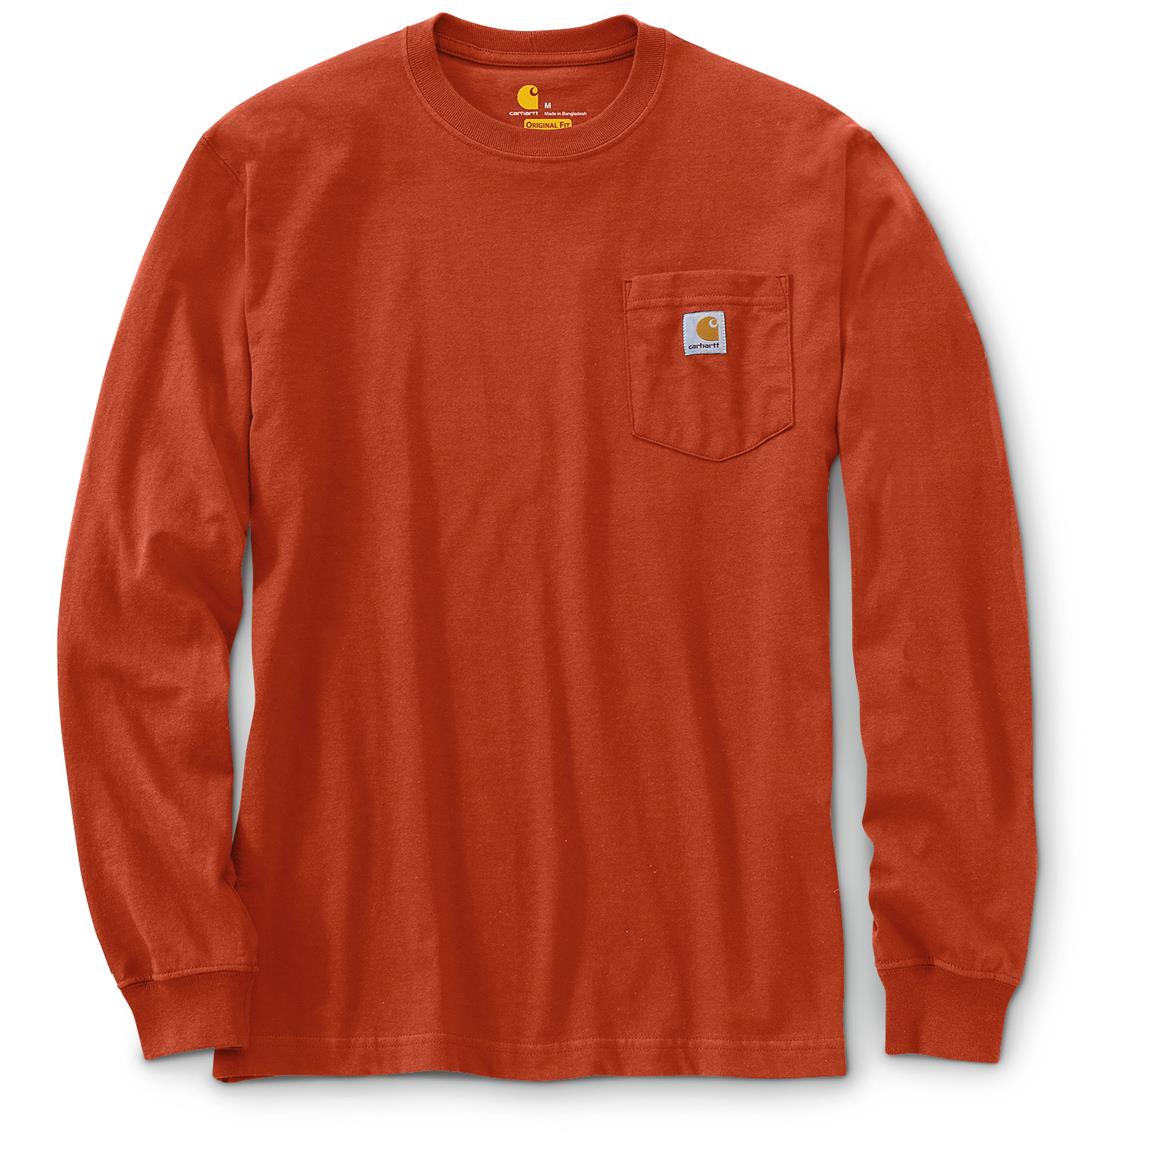 Carhartt Men's Long-Sleeve Pocket T-Shirt - 635652, Shirts at Sportsman ...